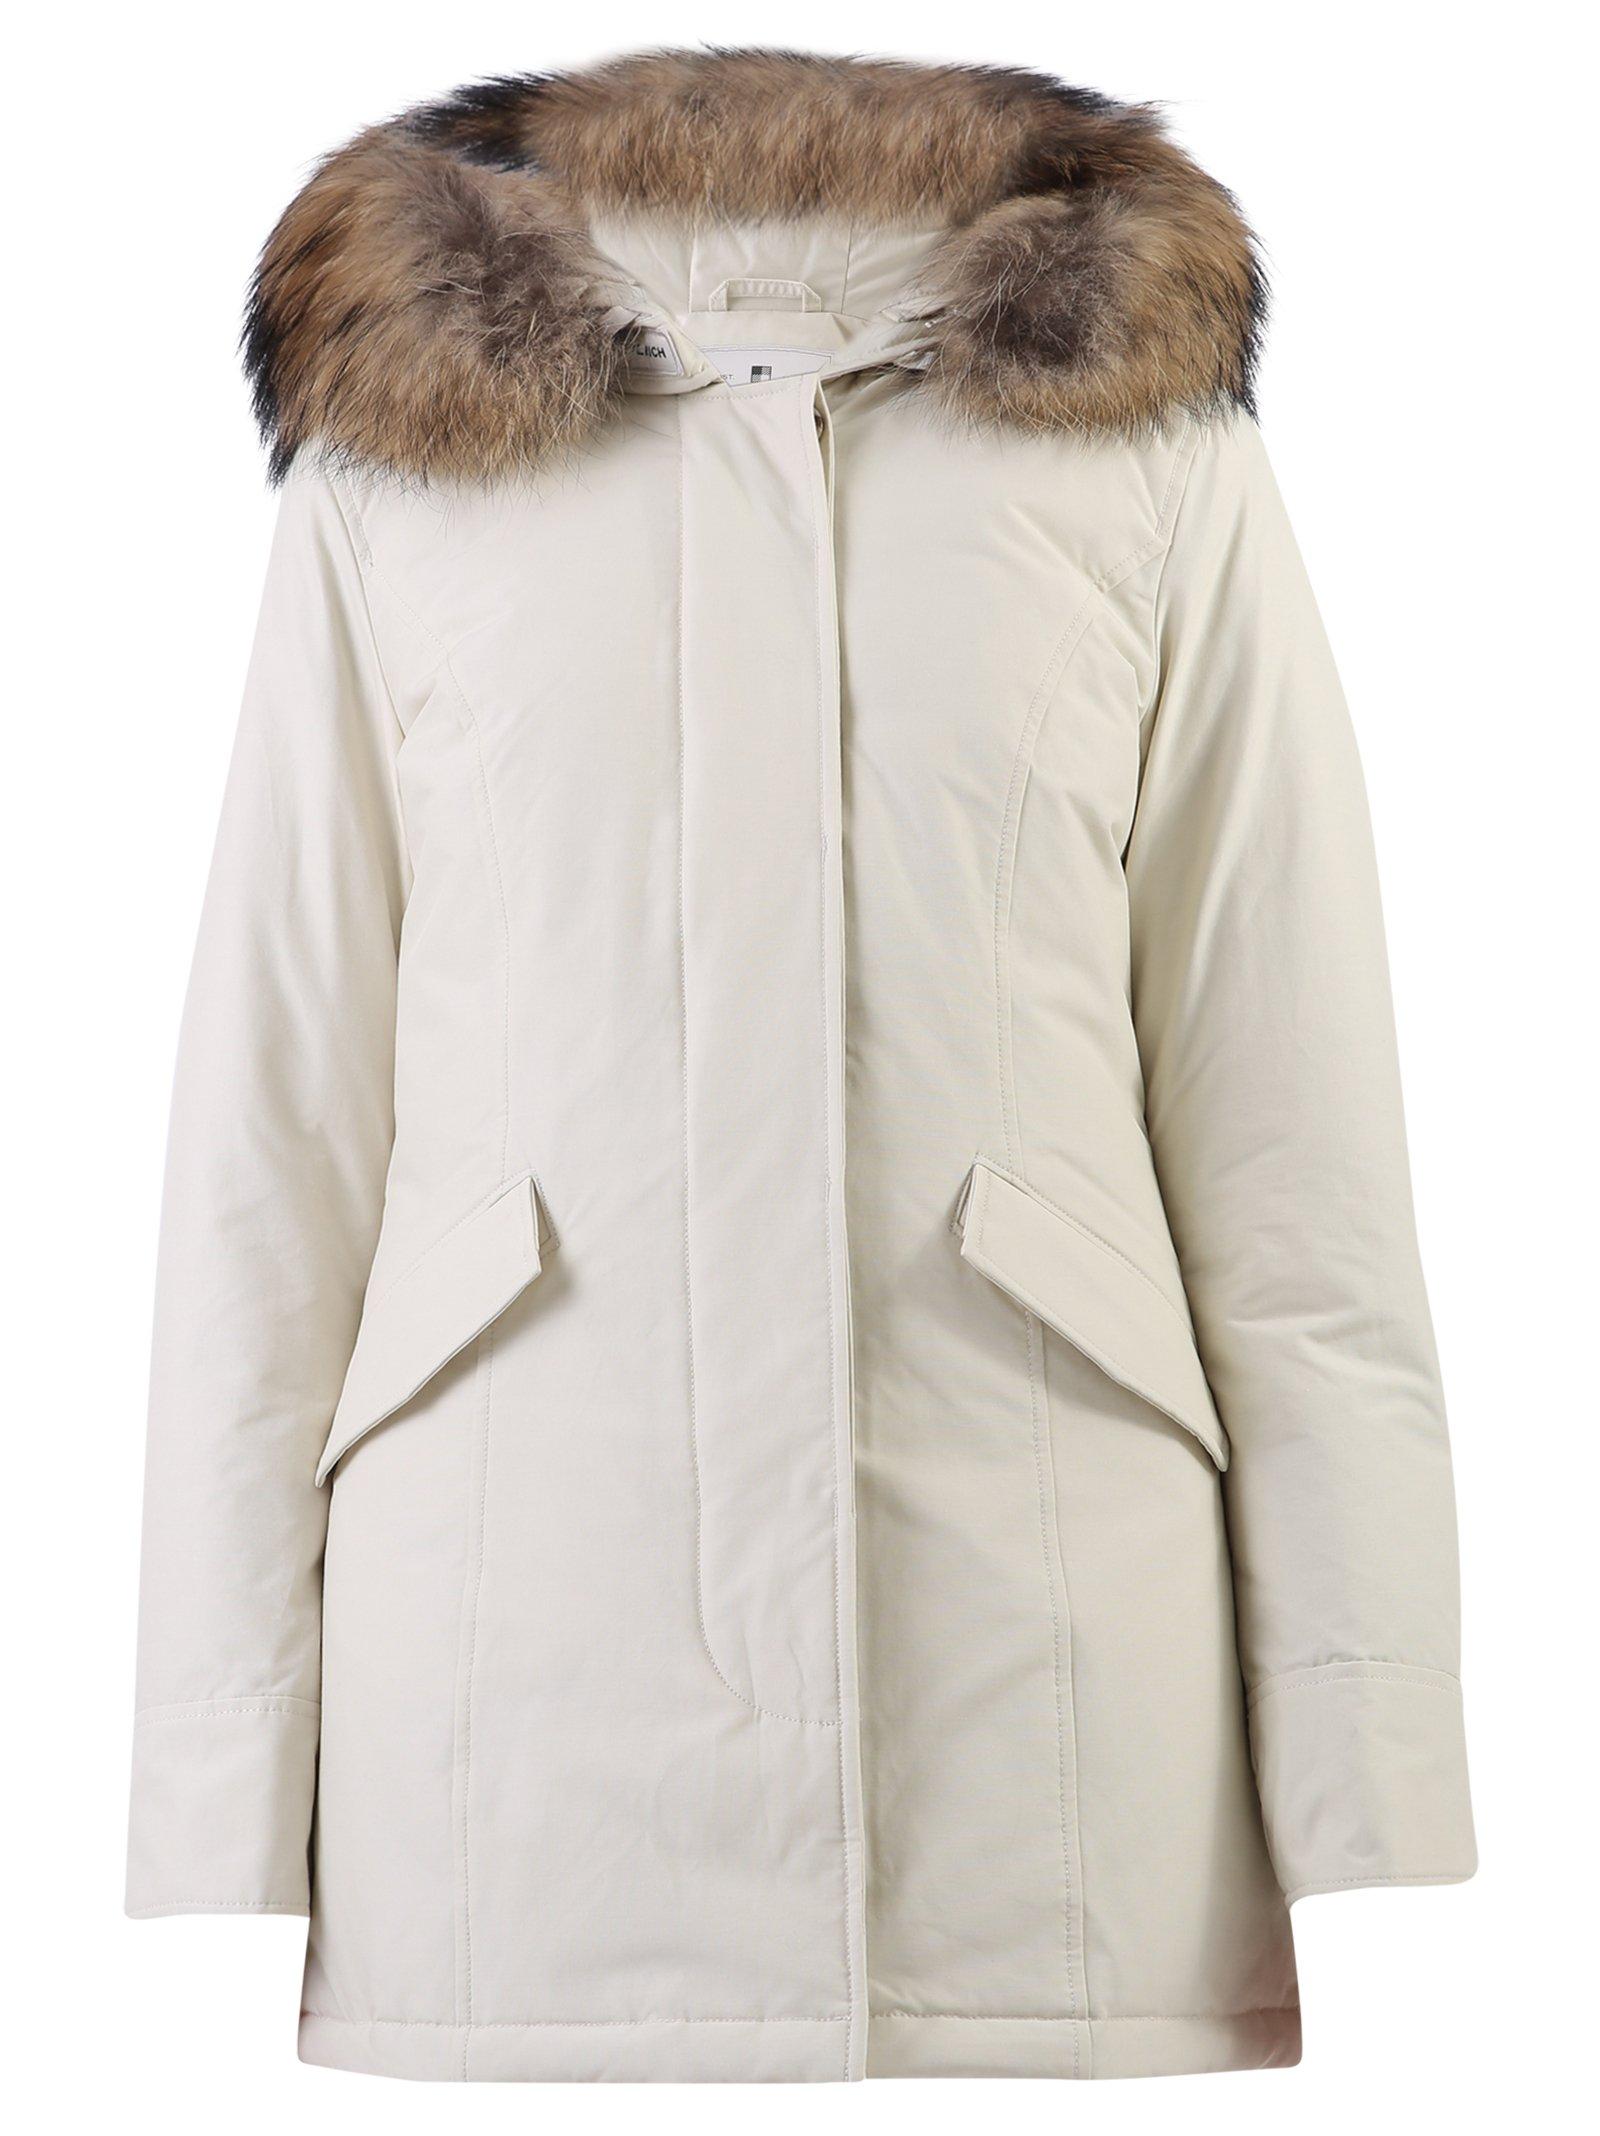 Woolrich Cotton Fur-trim Arctic Parka Coat in White - Lyst